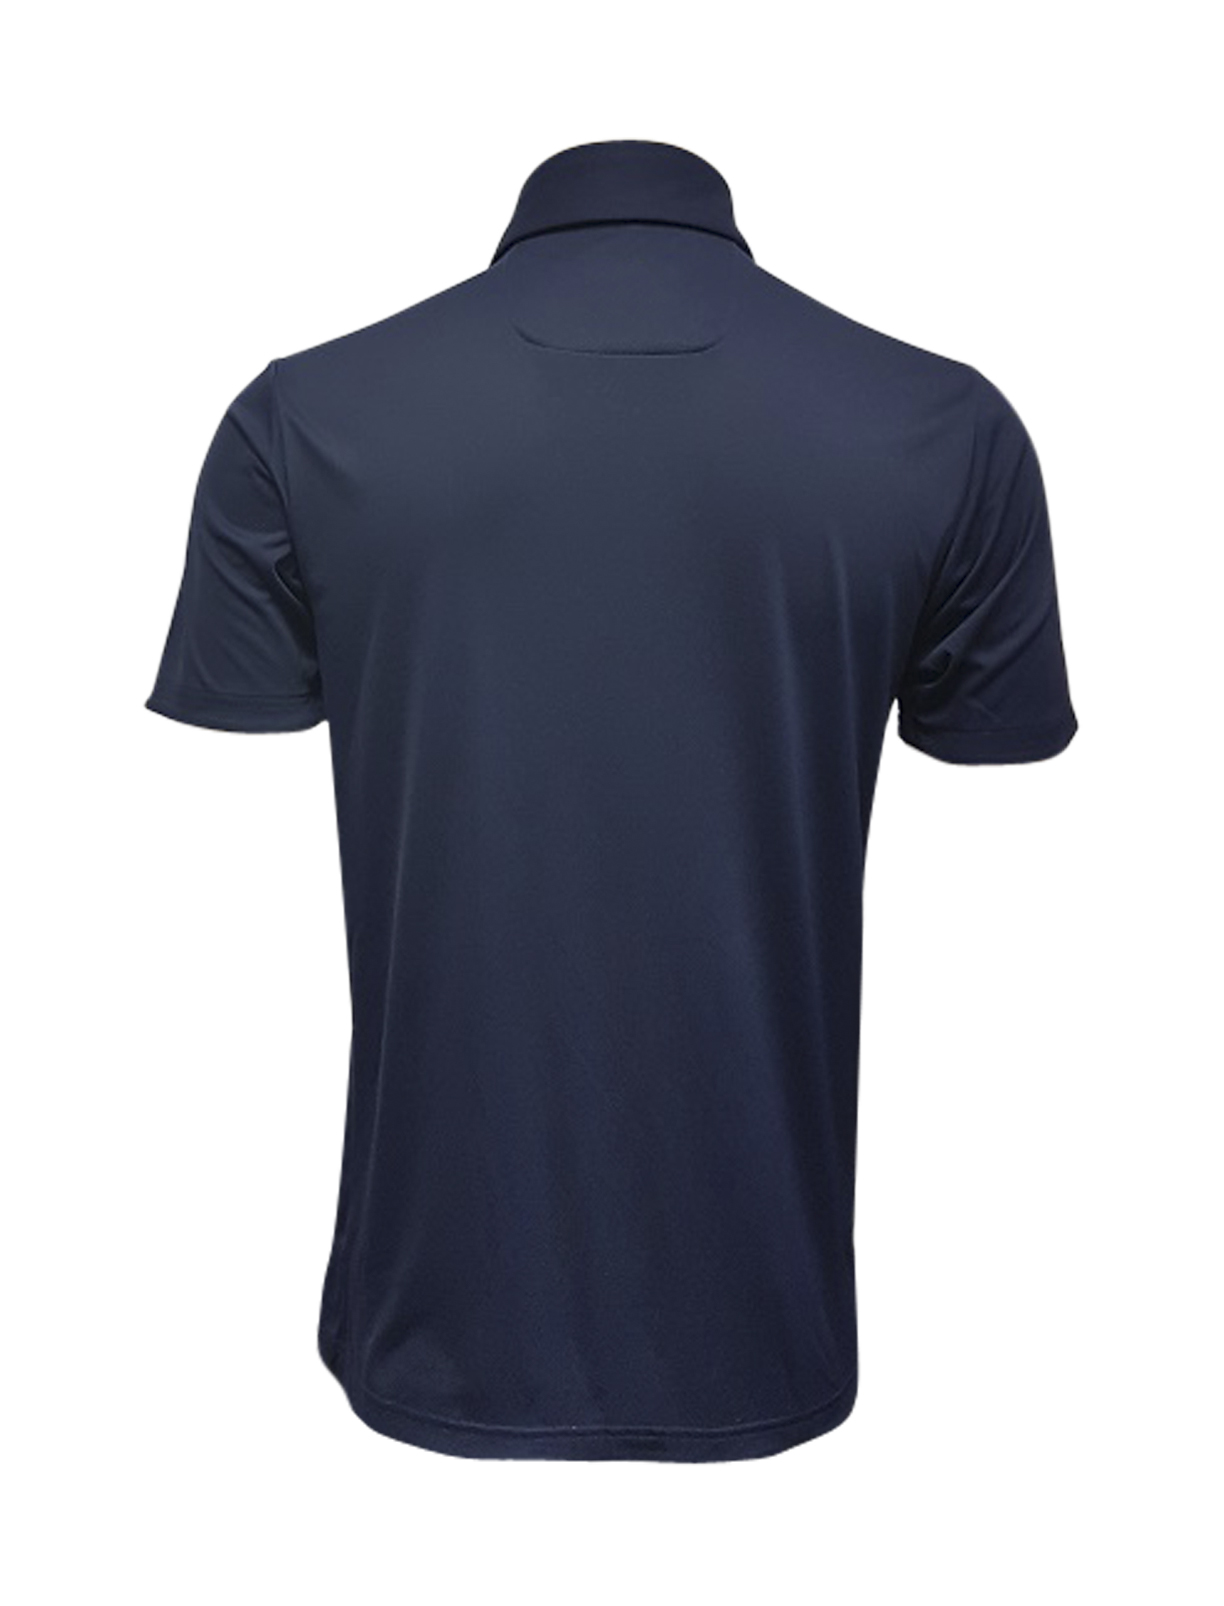 blue adidas golf shirt